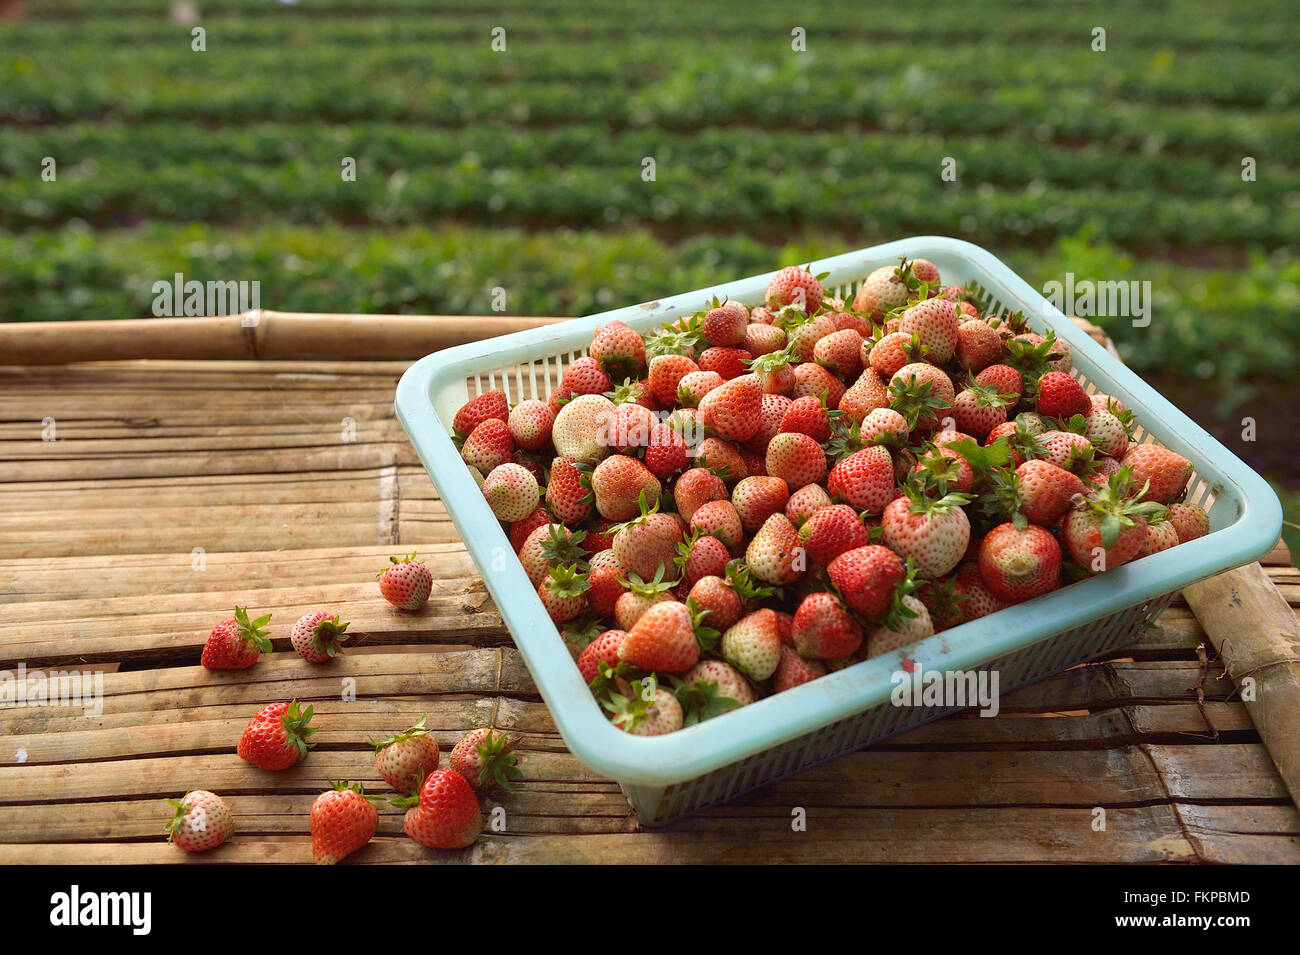 Strawberry farm at Doi angkhang , Chiangmai province Stock Photo